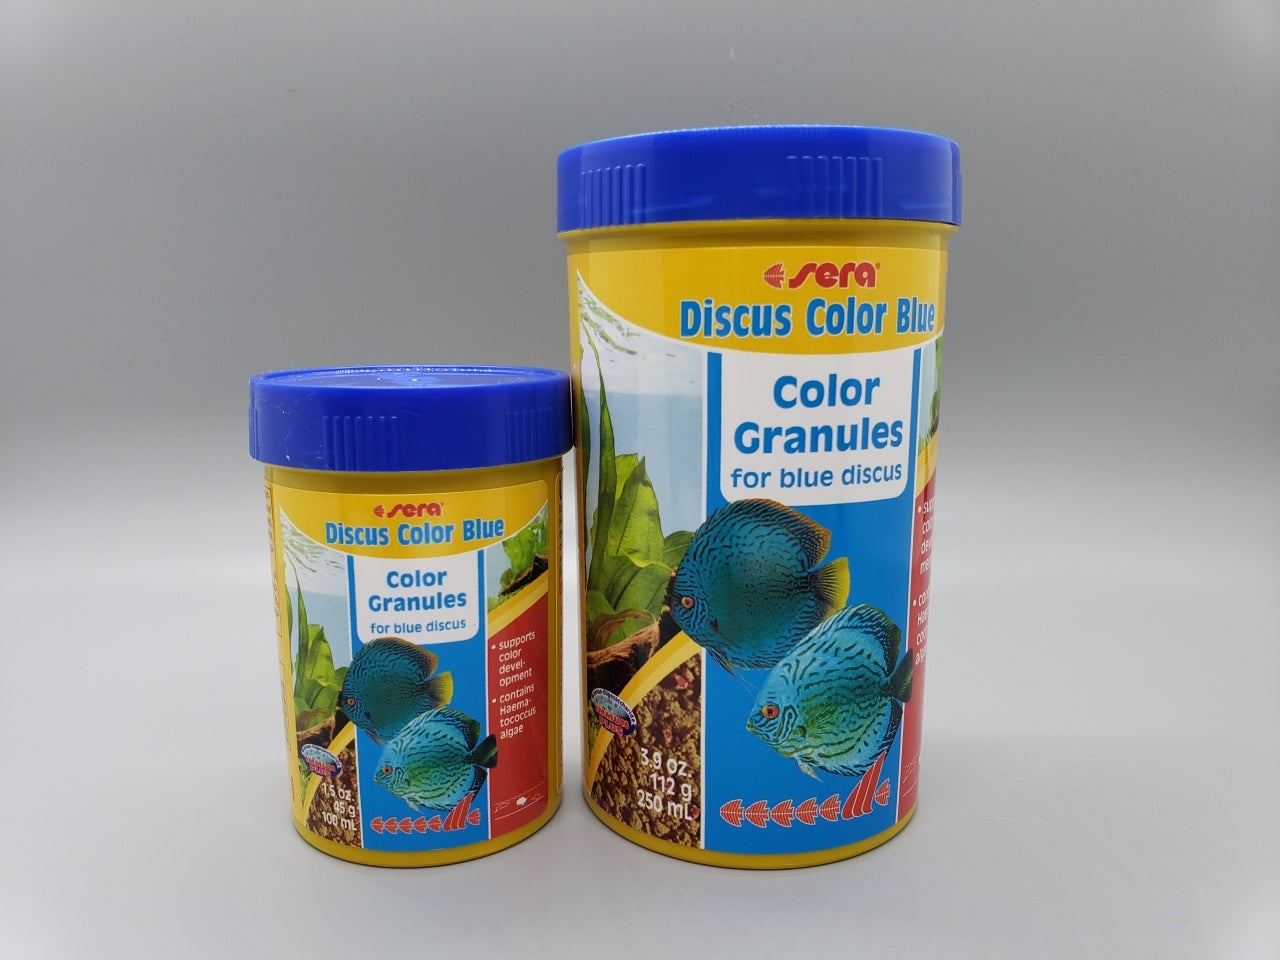  sera 1 Piece Discus granules Fish Food, 9.2 lb/2 kg : Pet  Supplies